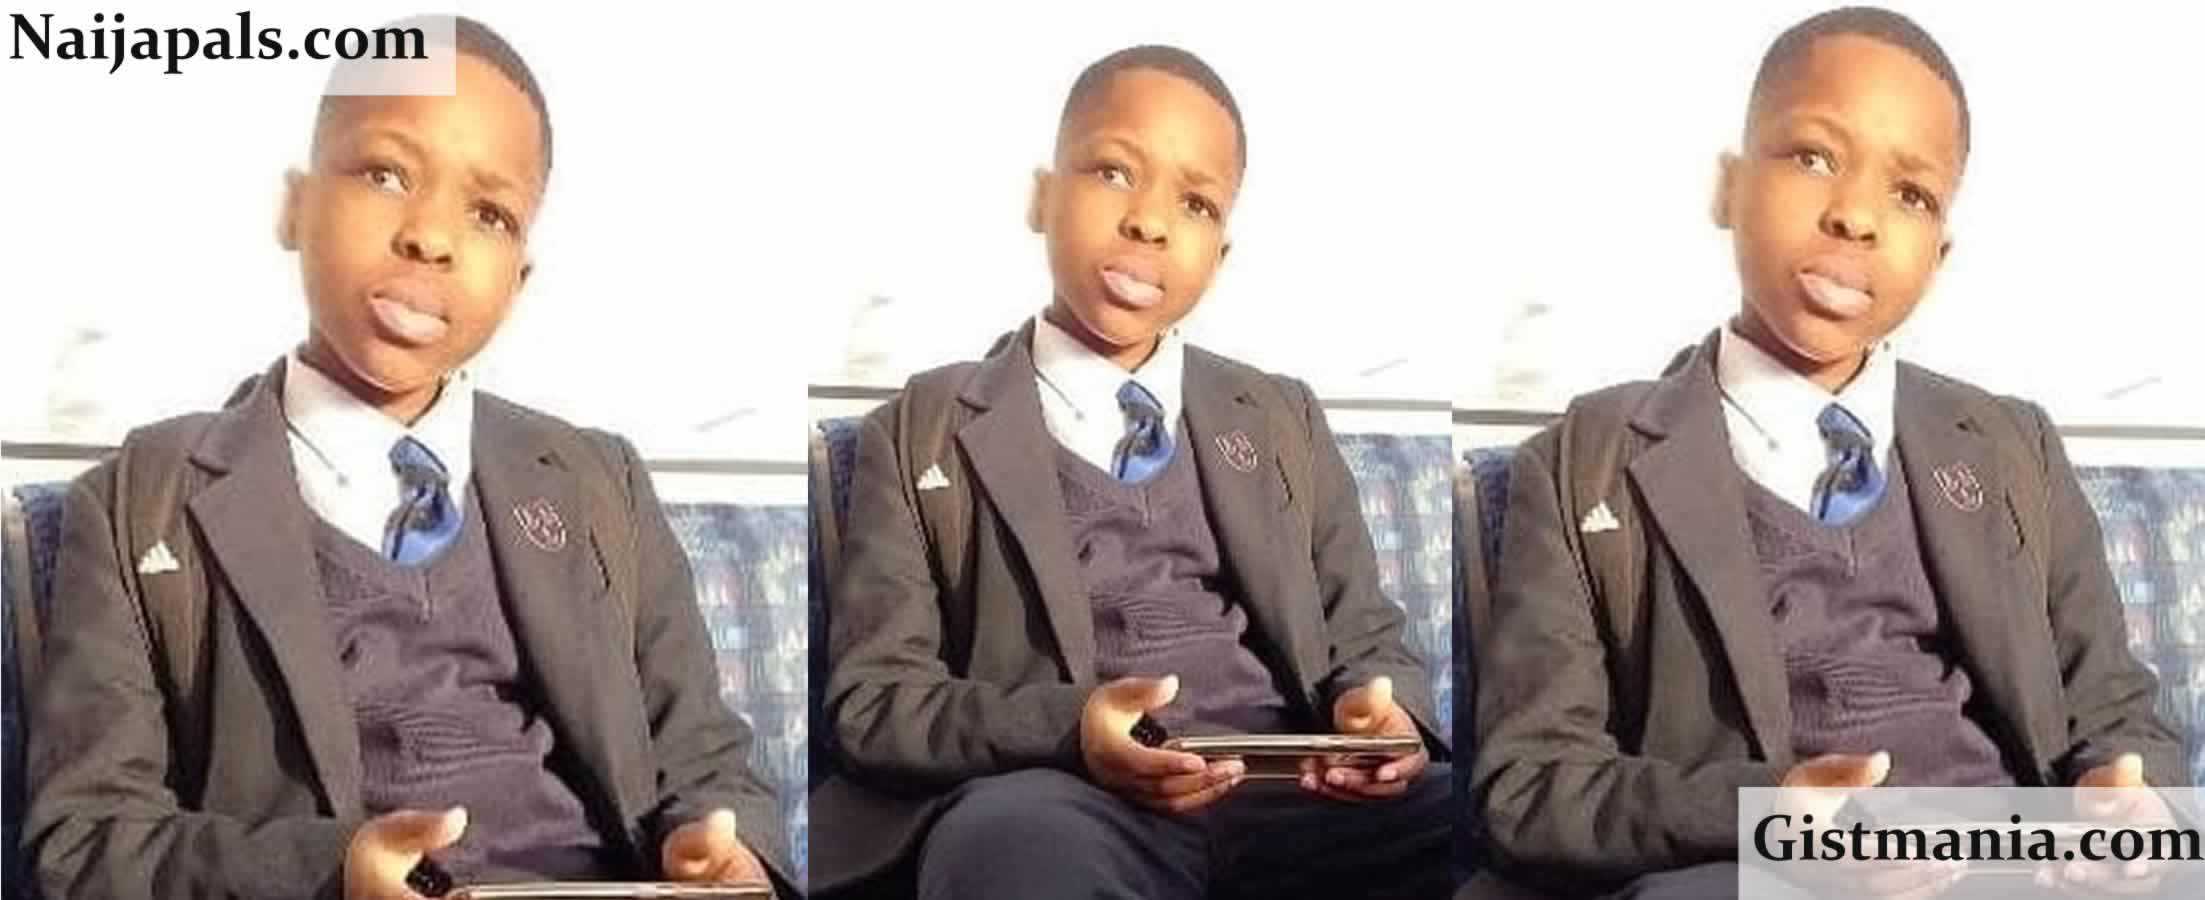 Tragedy Strikes: 14-Year-Old Nigerian, Daniel Anjorin Killed In London Sword Attack